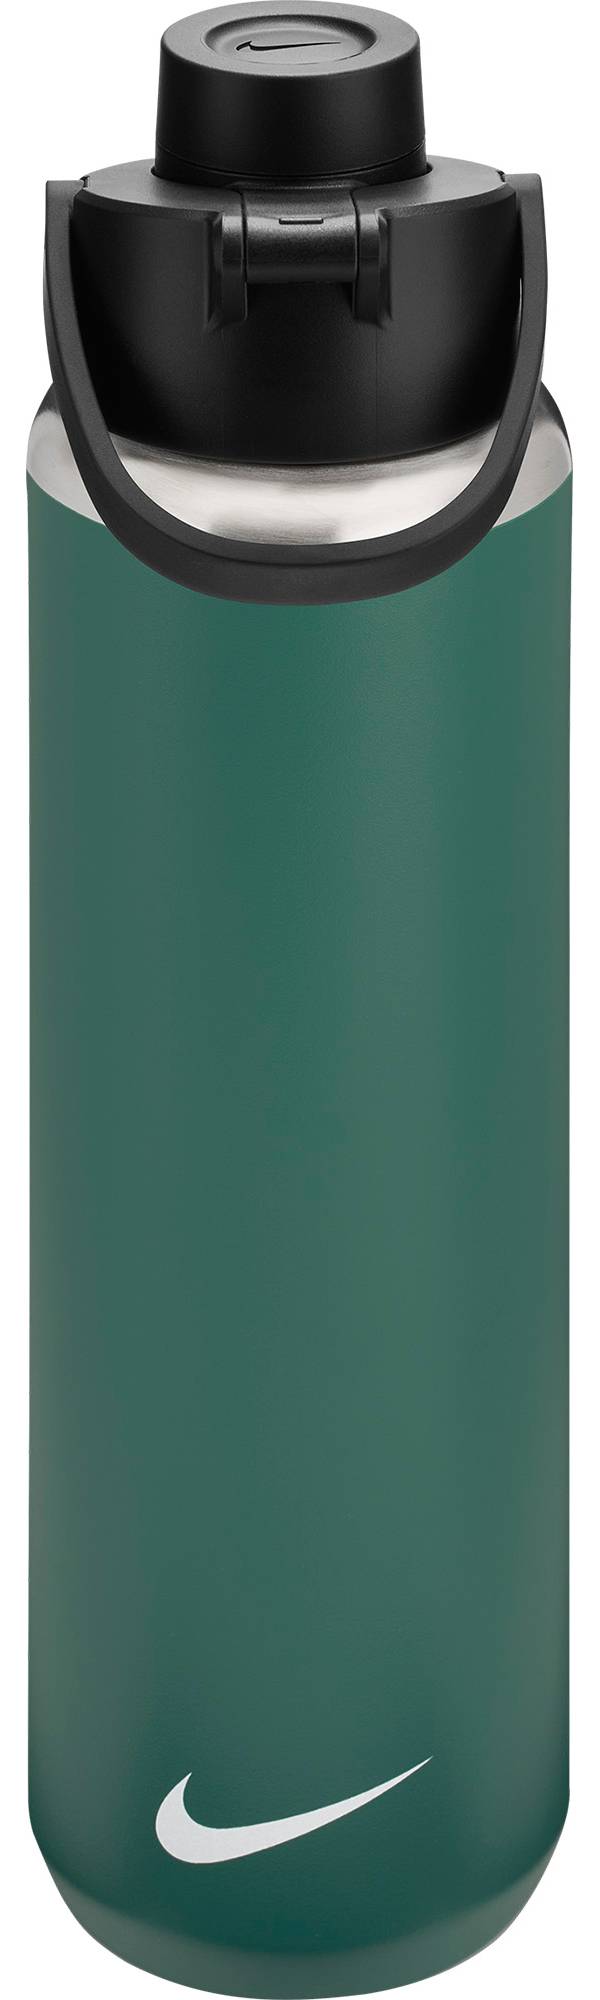 24oz Stainless Steel Chug Water Bottle Gray - Room Essentials™